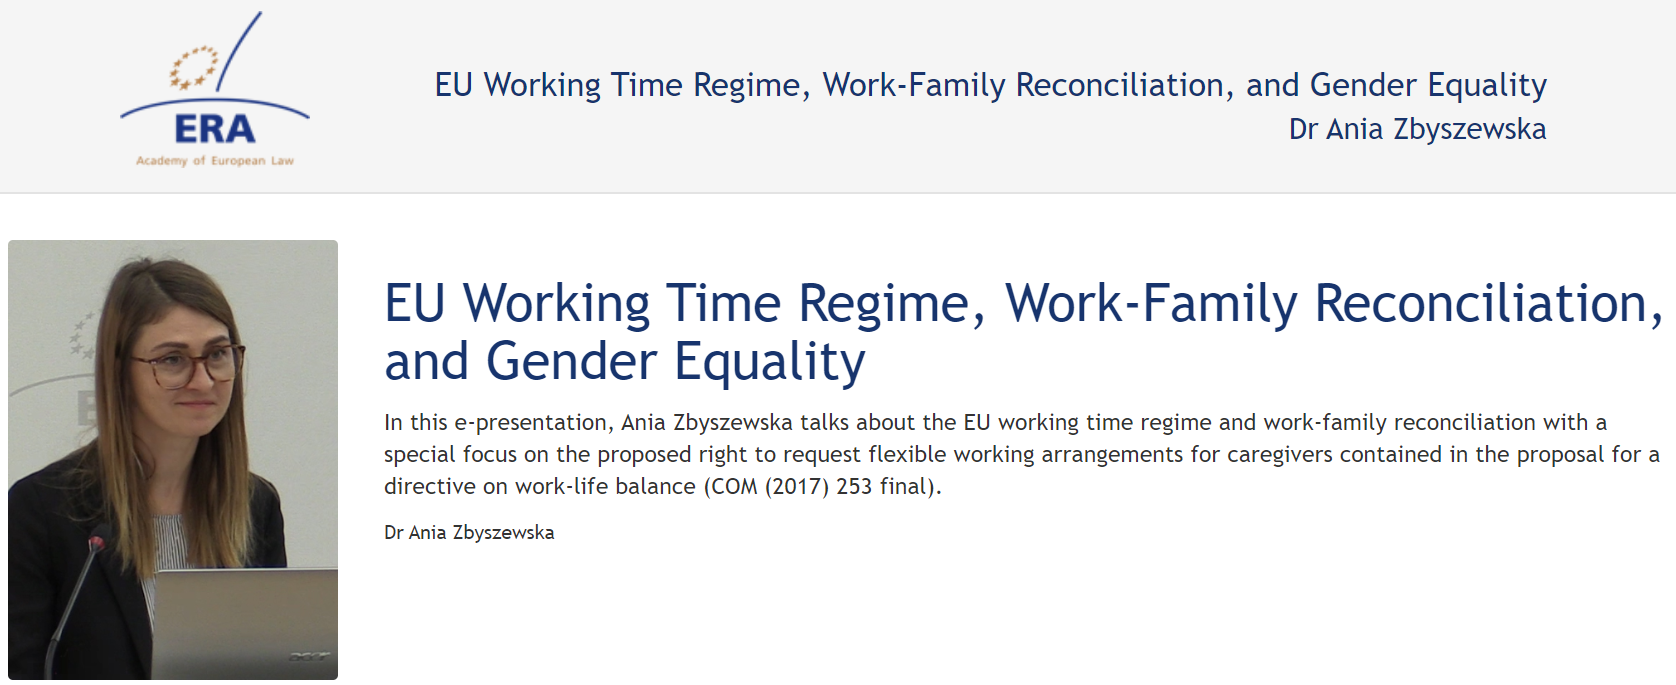 Dr Ania Zbyszewska (November 2017): EU Working Time Regime, Work-Family Reconciliation, and Gender Equality